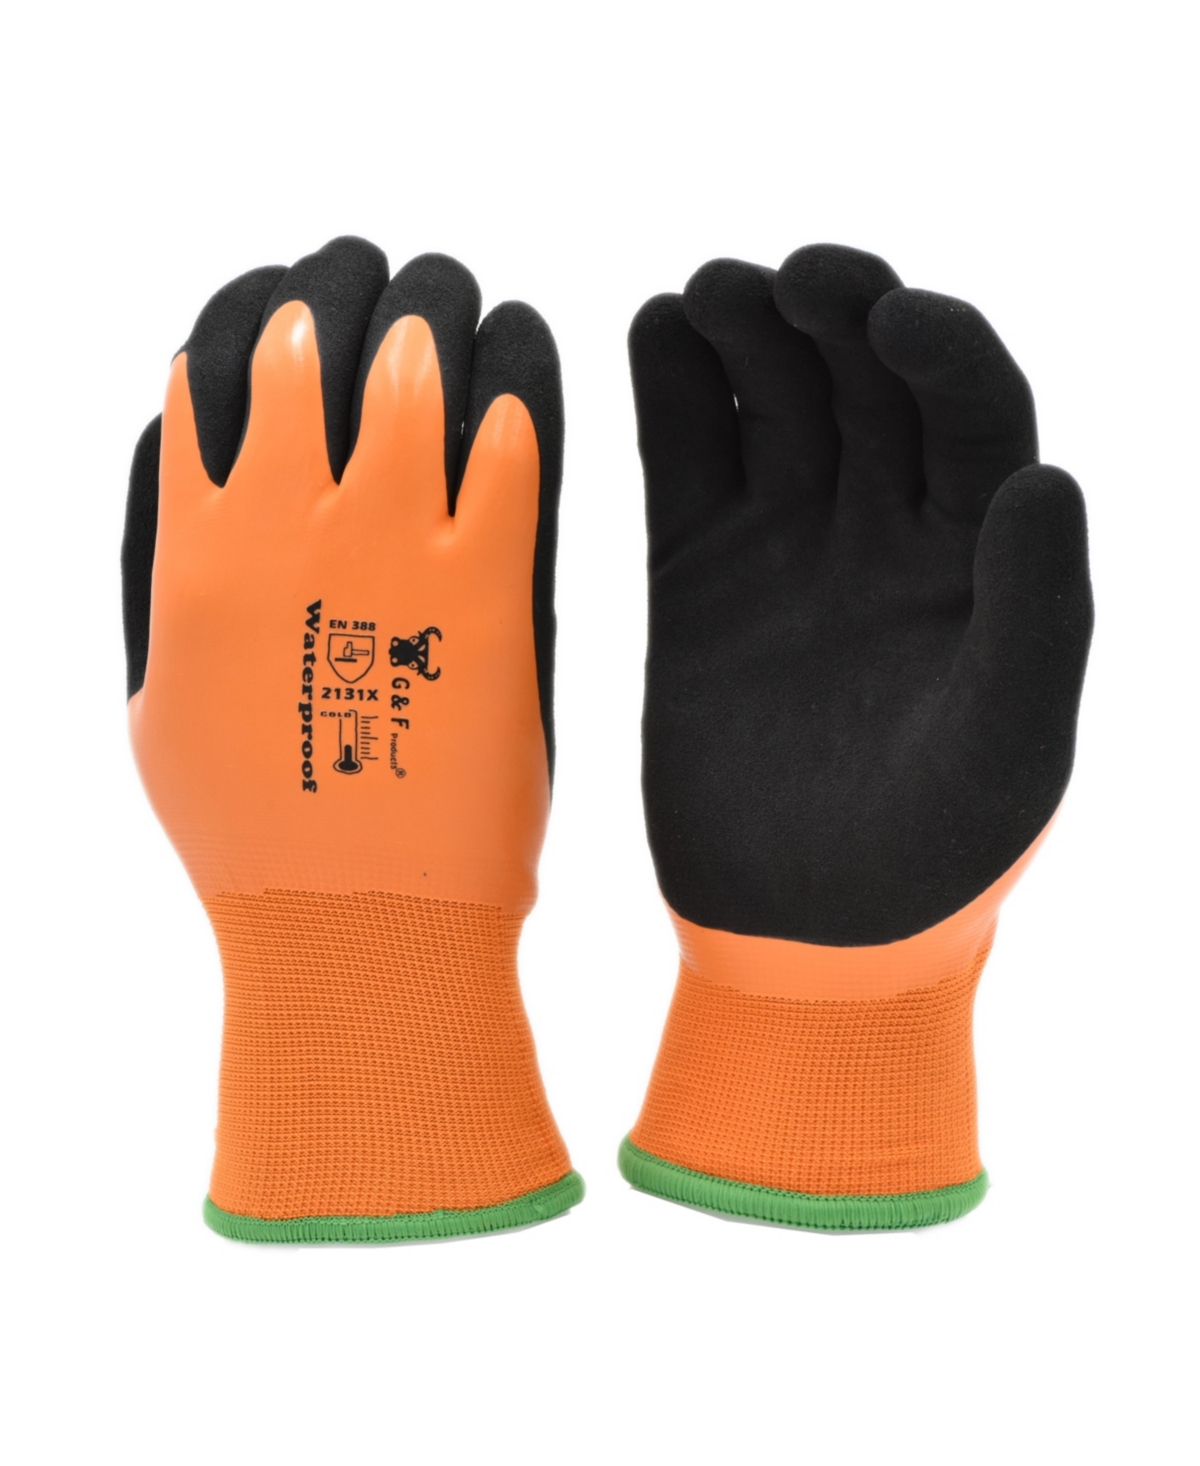 Waterproof Winter Gloves - Orange